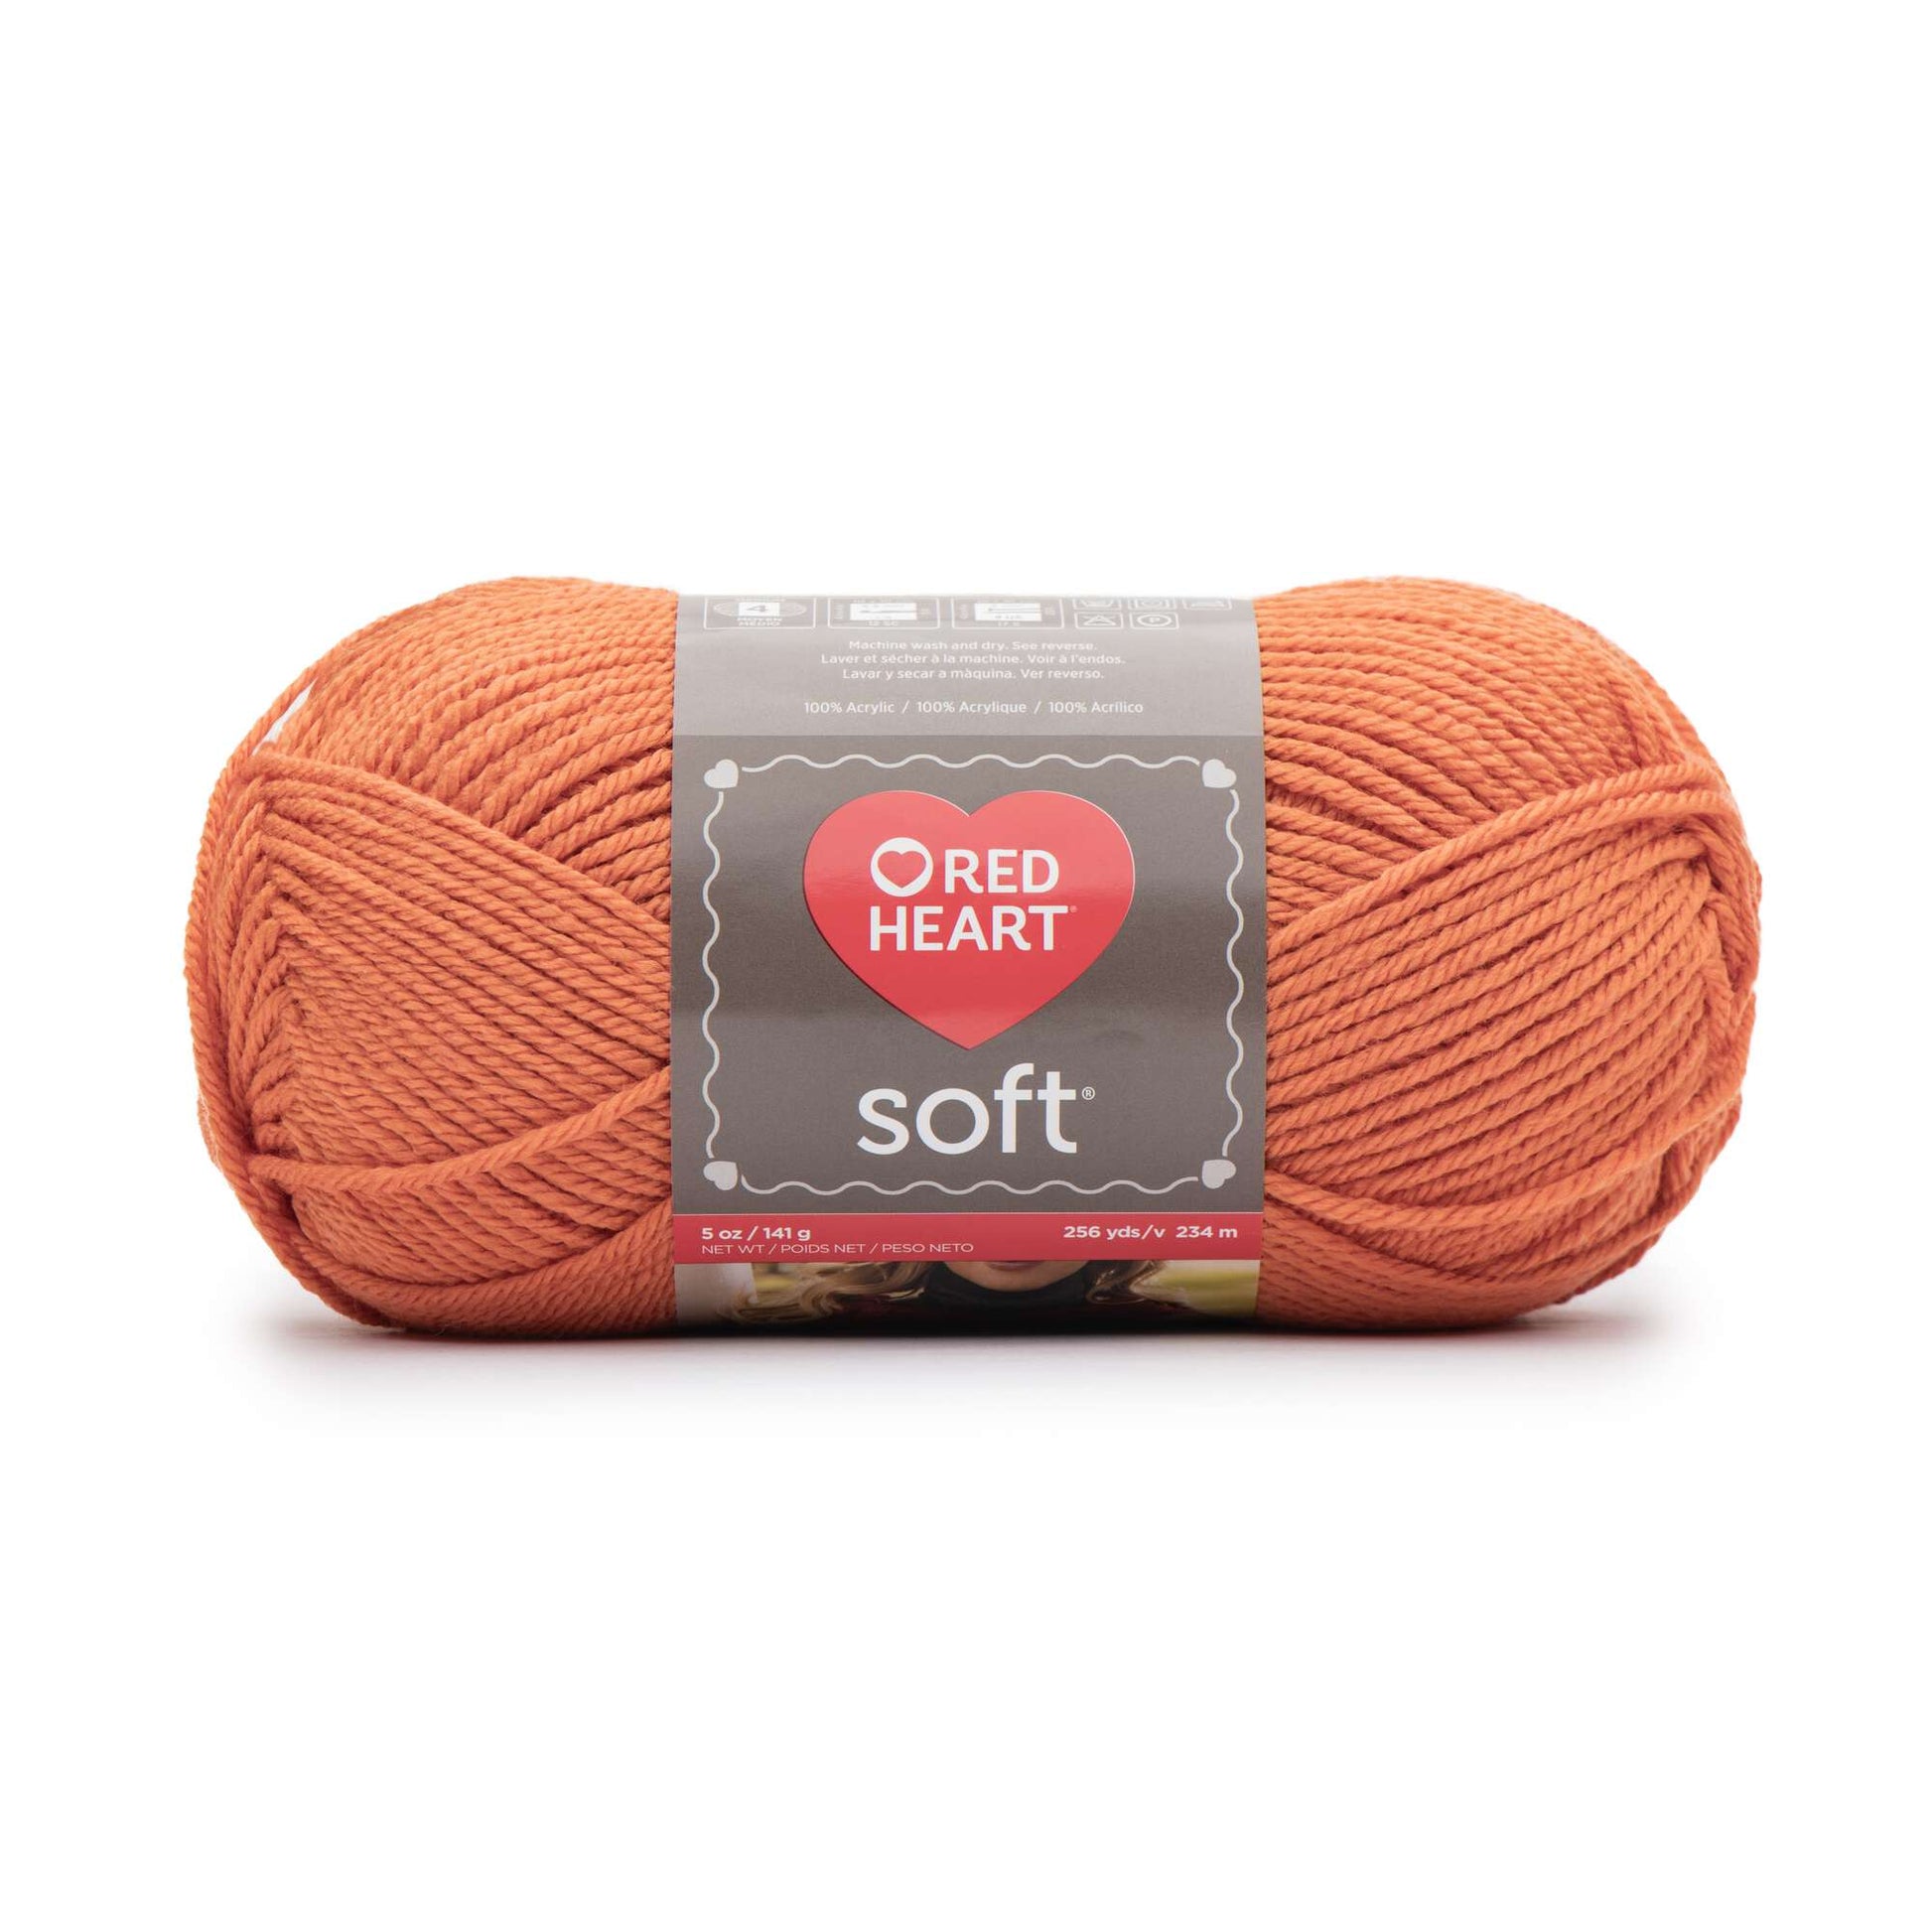 Red Heart Soft Yarn (283g/10oz) - Clearance shades